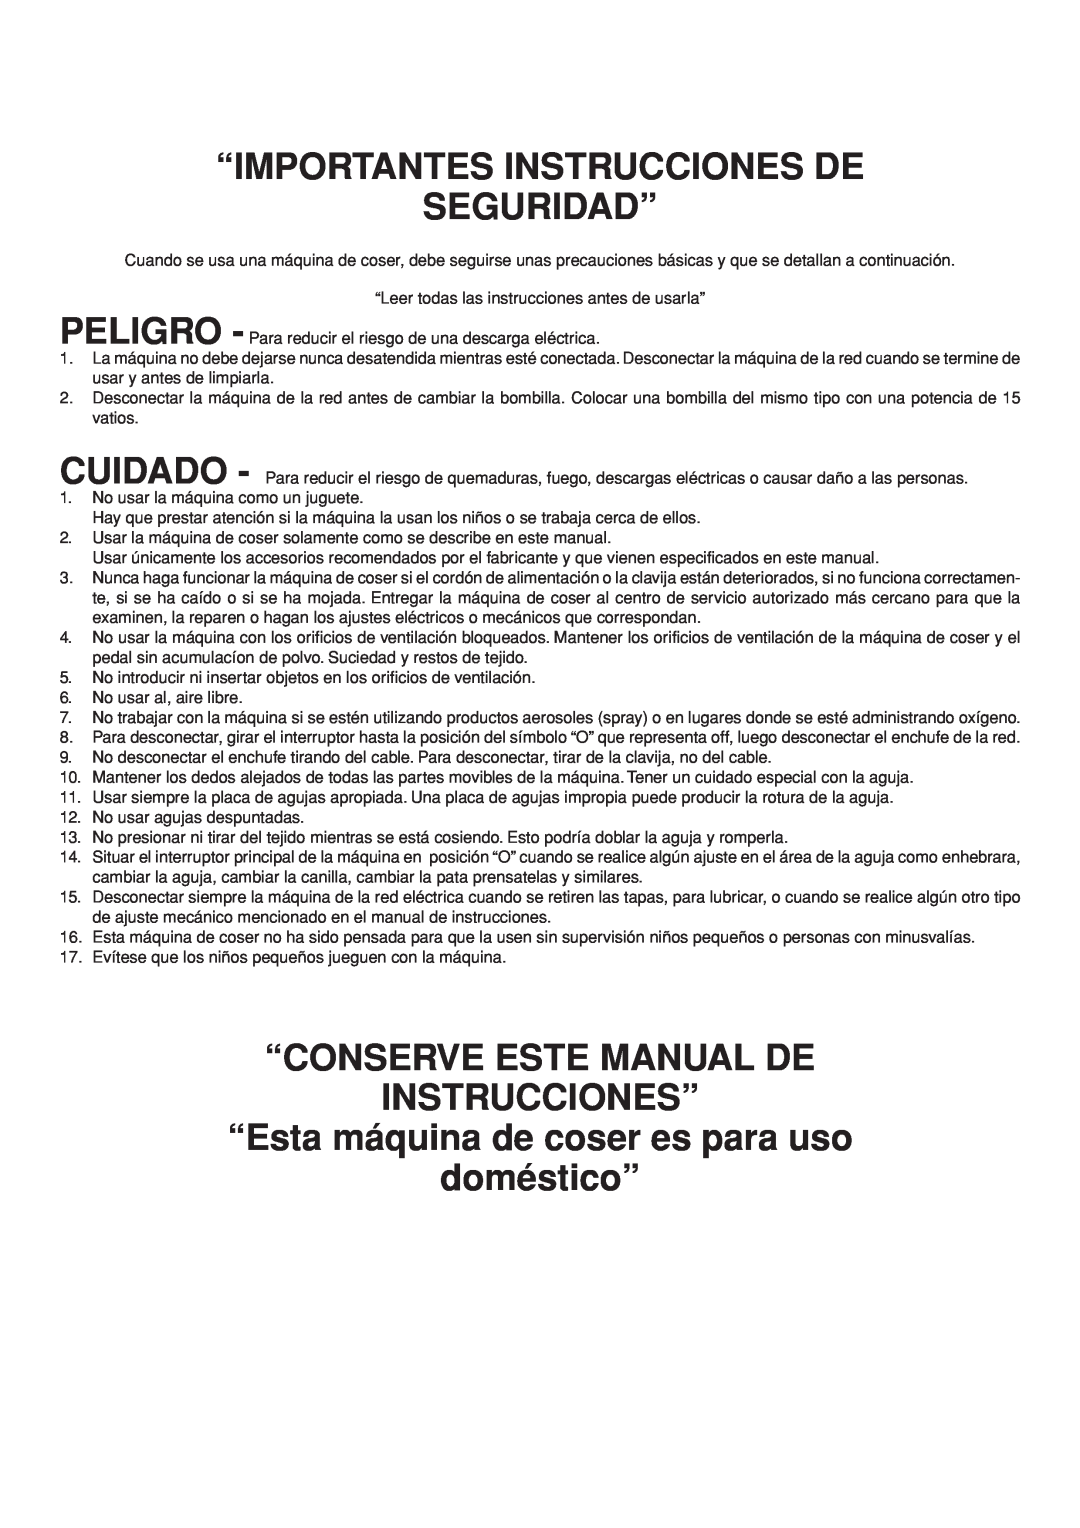 Brother LS 1520 instruction manual “Importantes Instrucciones De Seguridad”, “Conserve Este Manual De Instrucciones” 